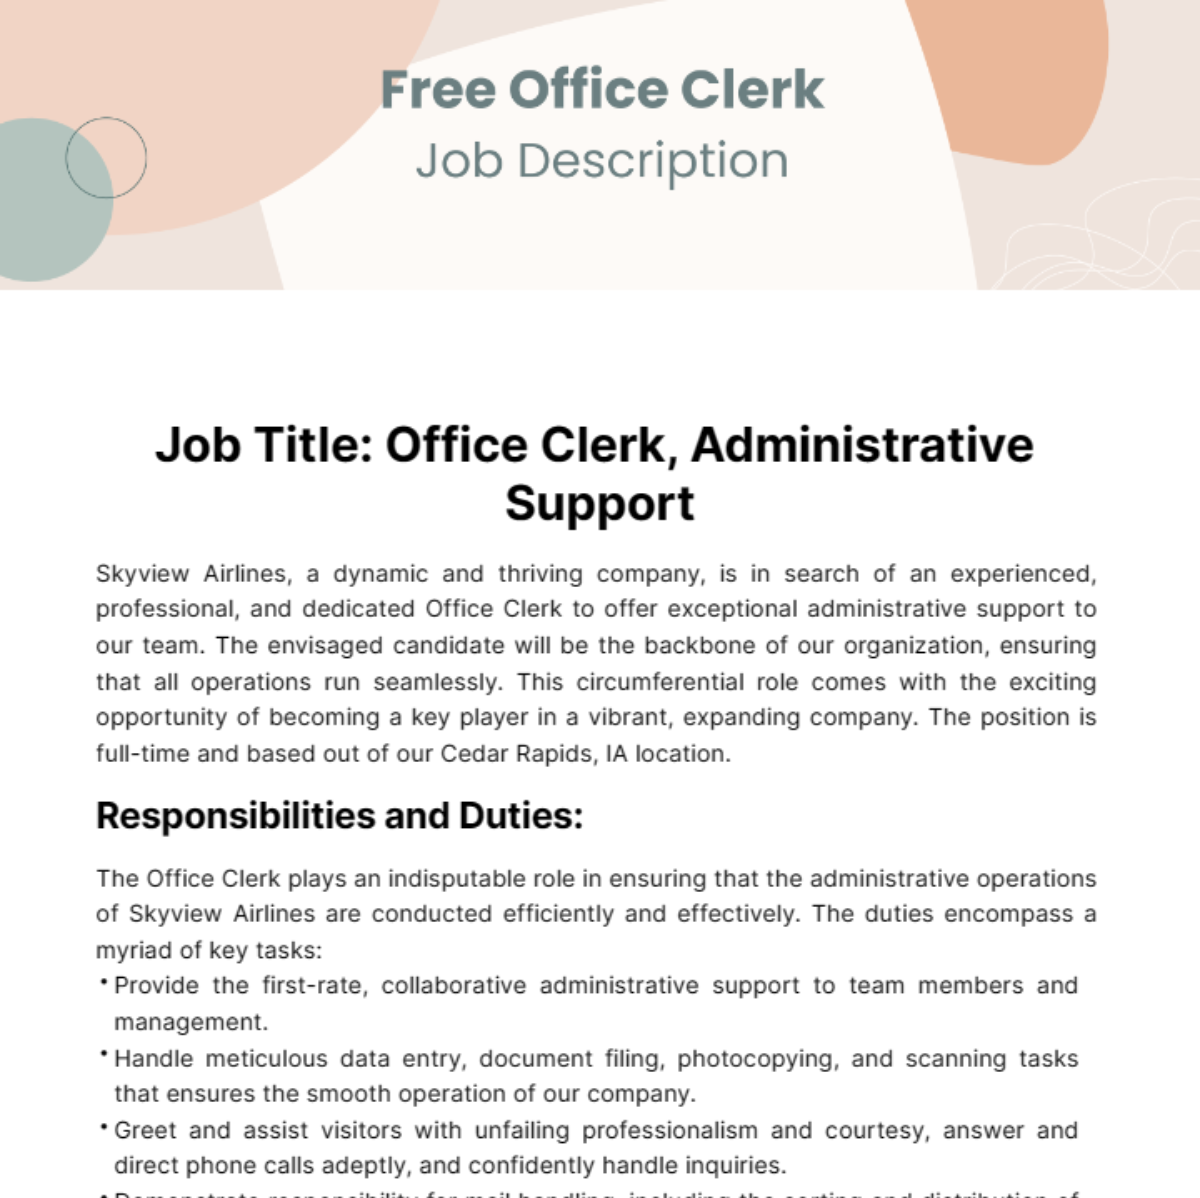 Office Clerk Job Description Template